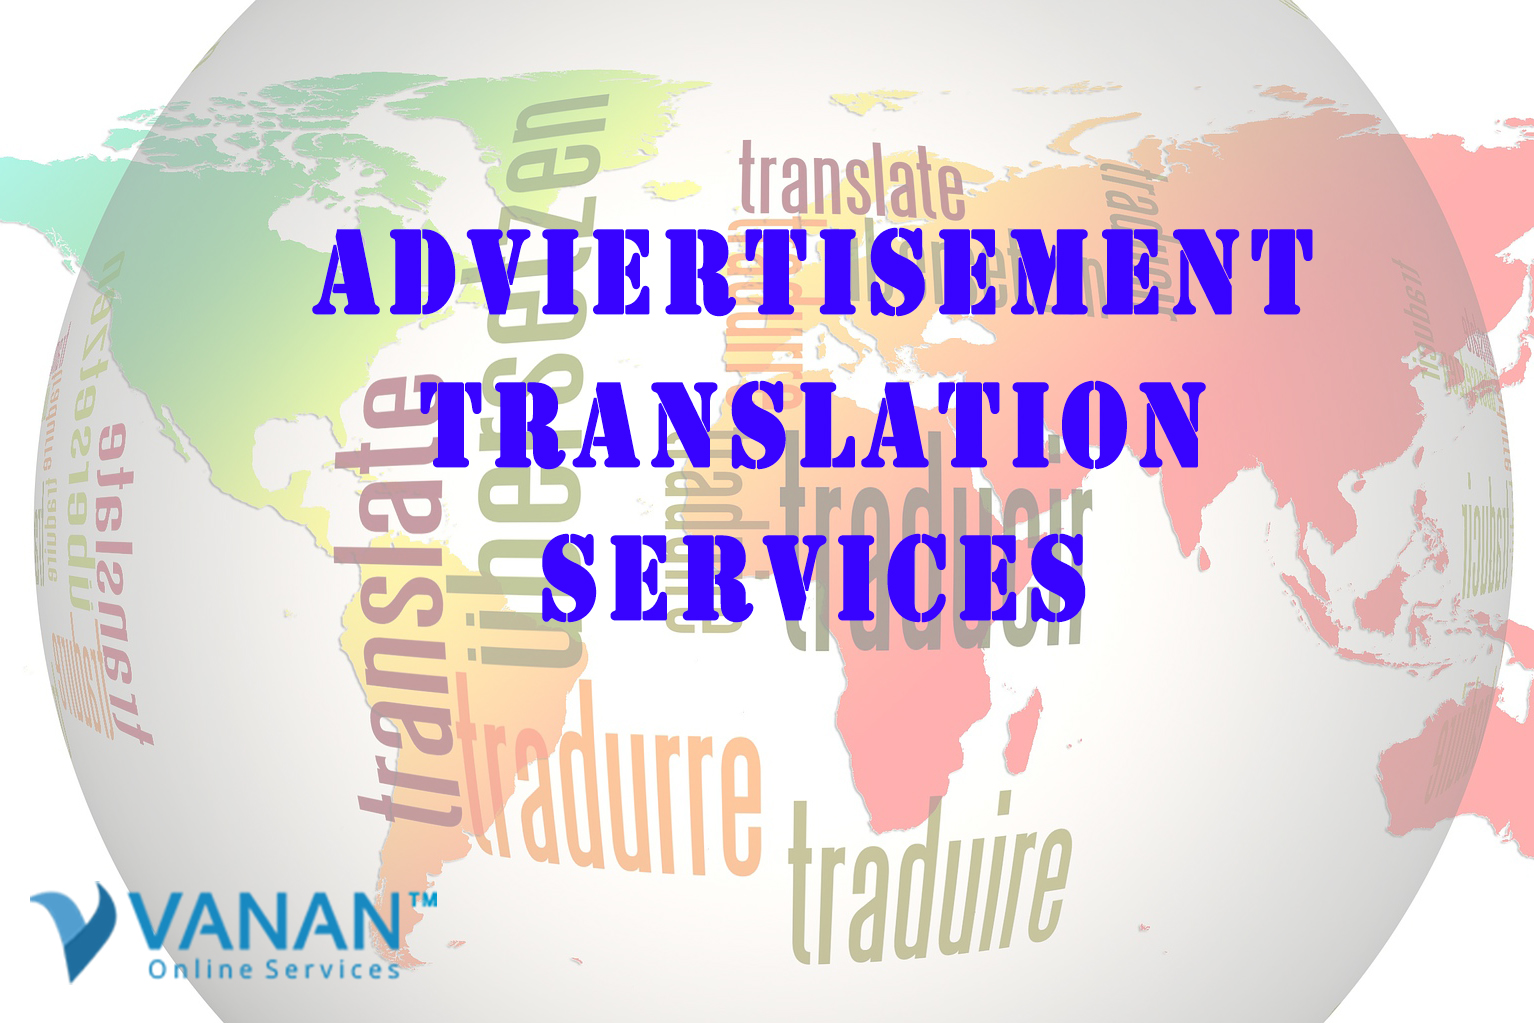 Advertising translation services